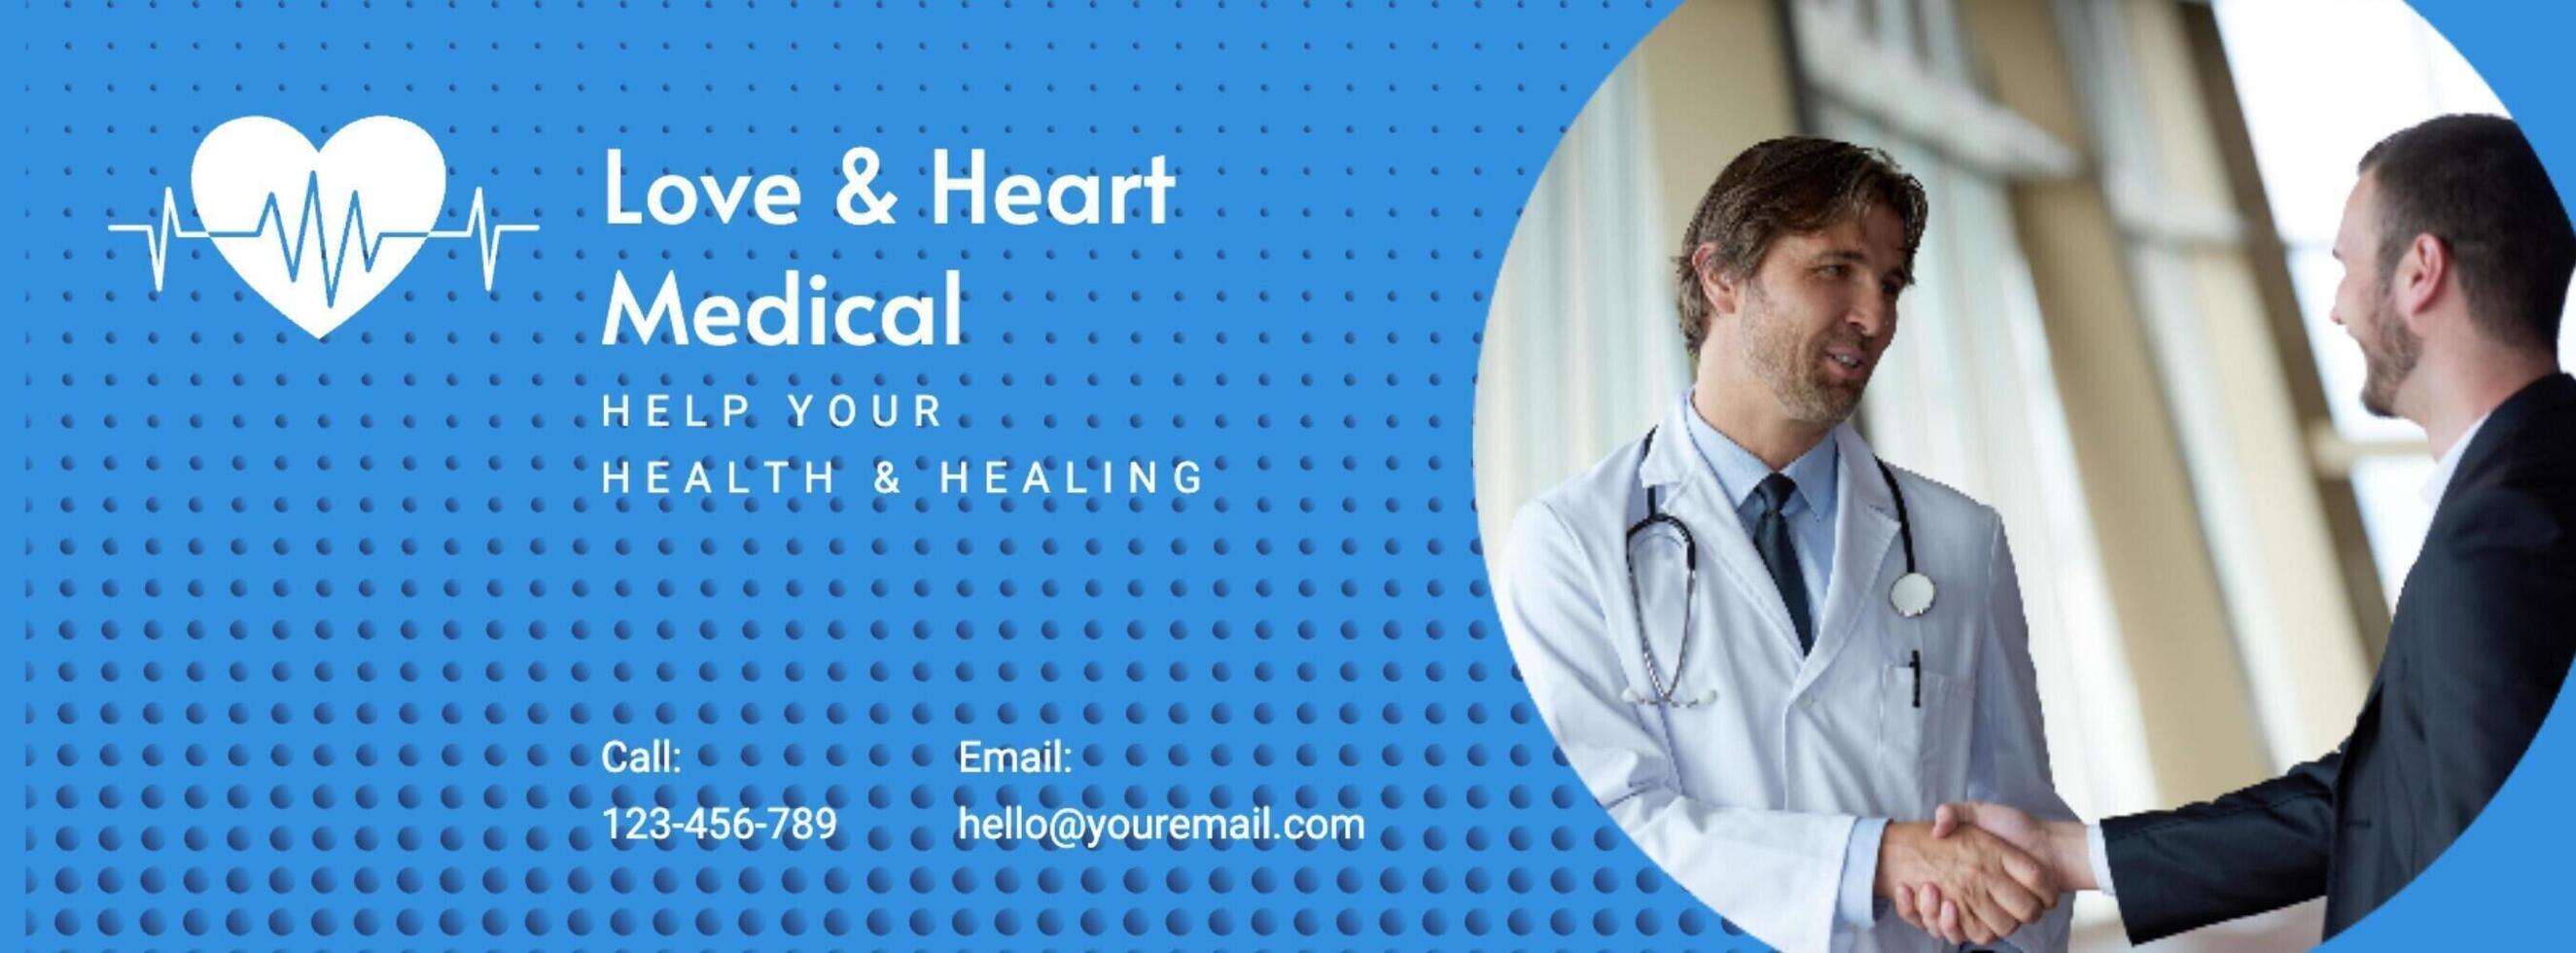 Blue Modern Heart Medical Facebook Cover template